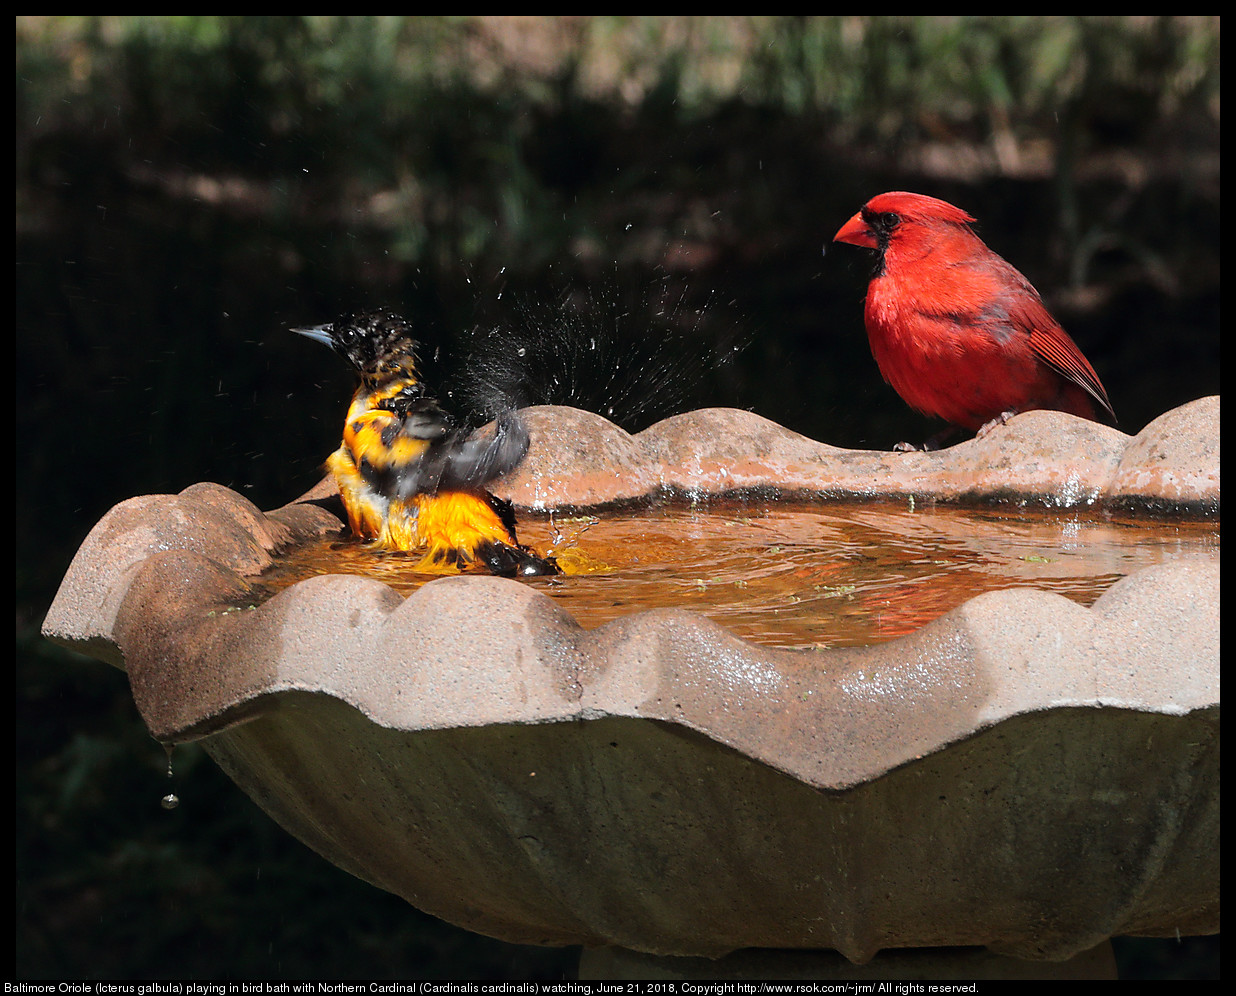 Baltimore Oriole (Icterus galbula) playing in bird bath with Northern Cardinal (Cardinalis cardinalis) watching, June 21, 2018